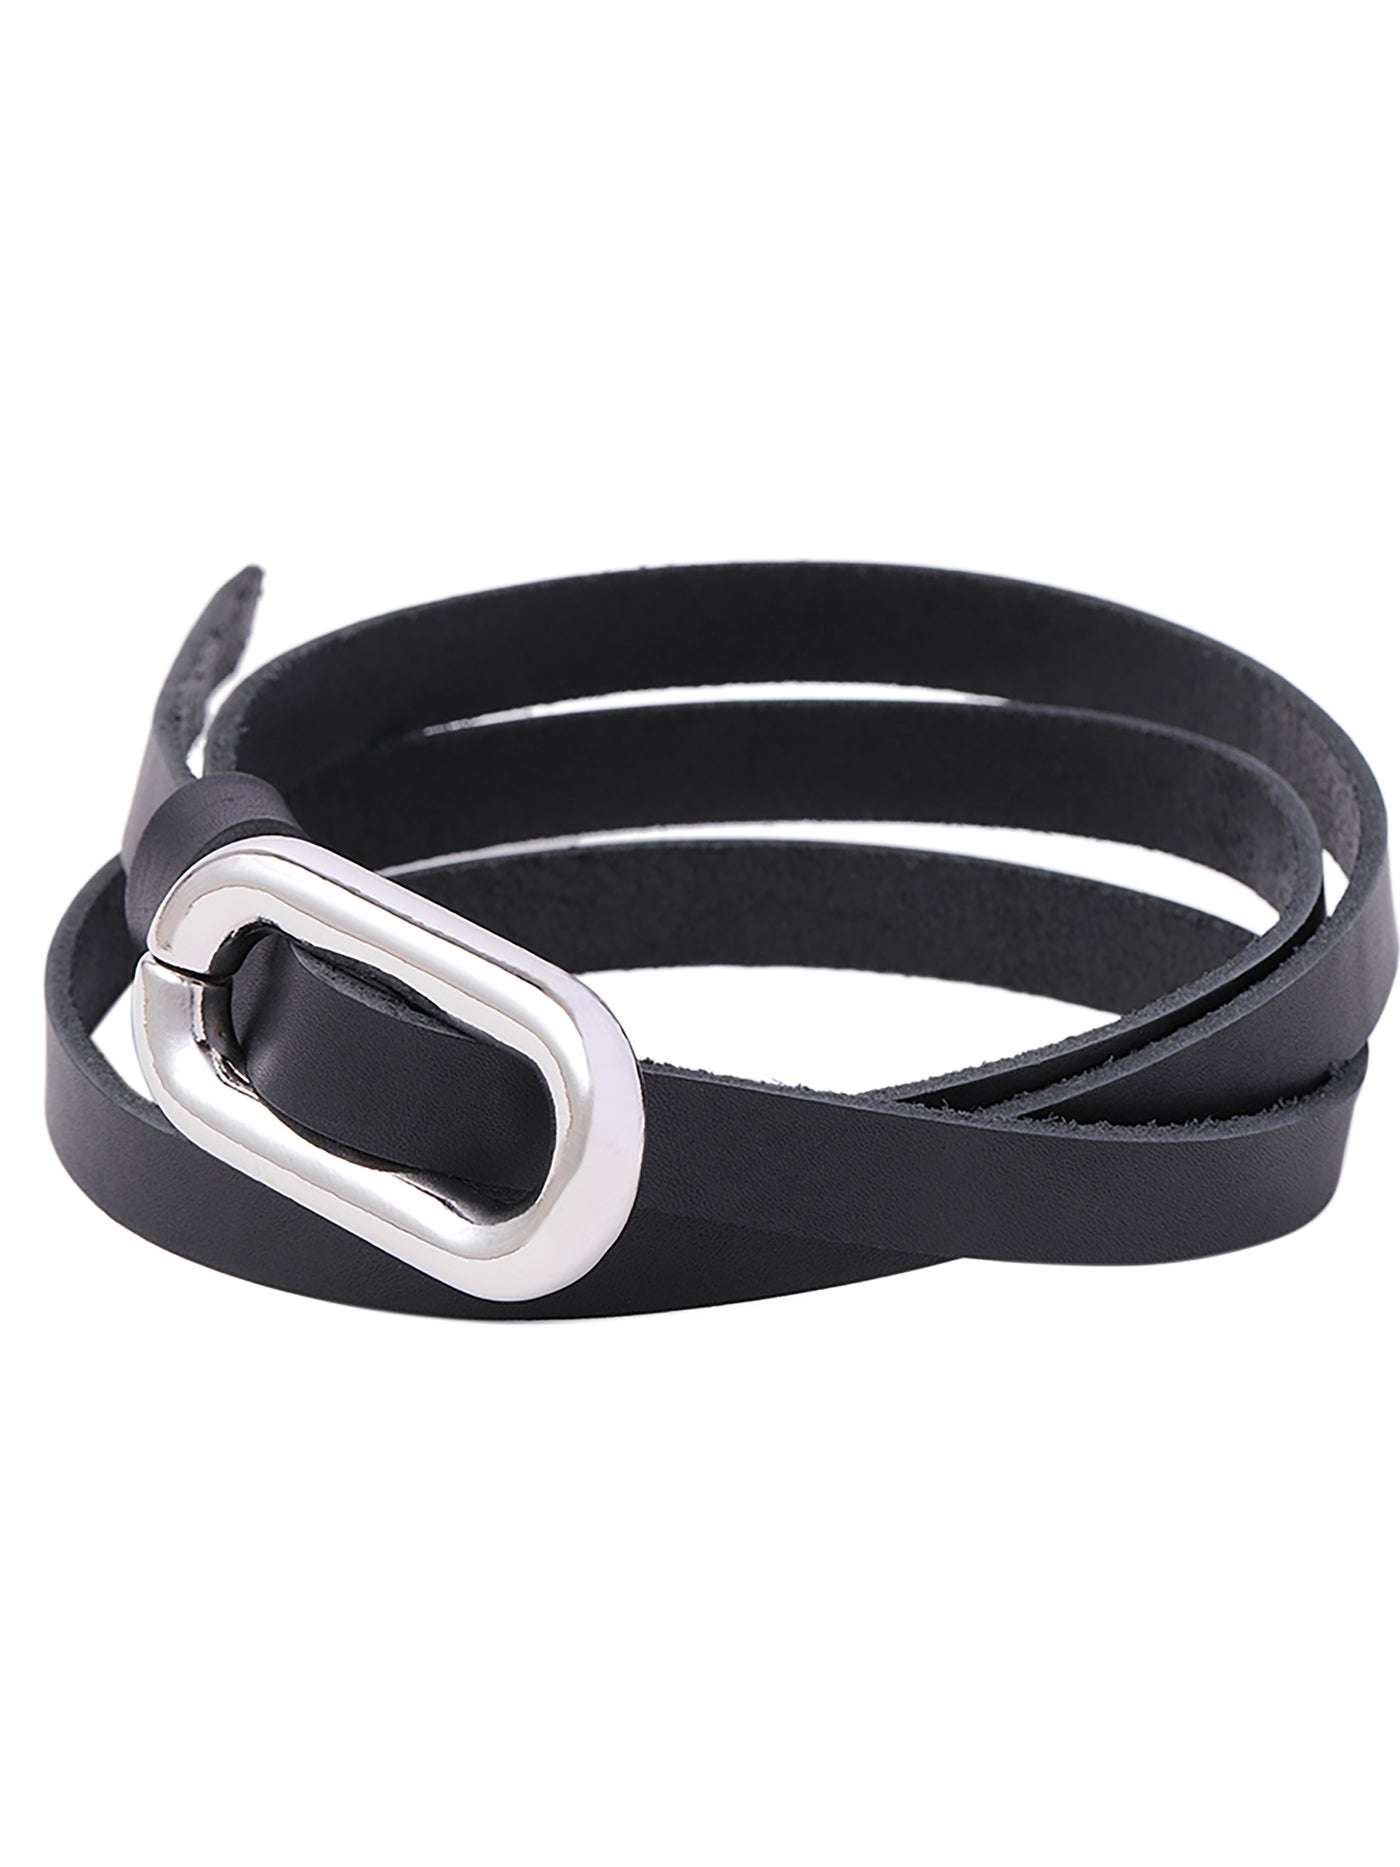 Aluminium buckle leather belt